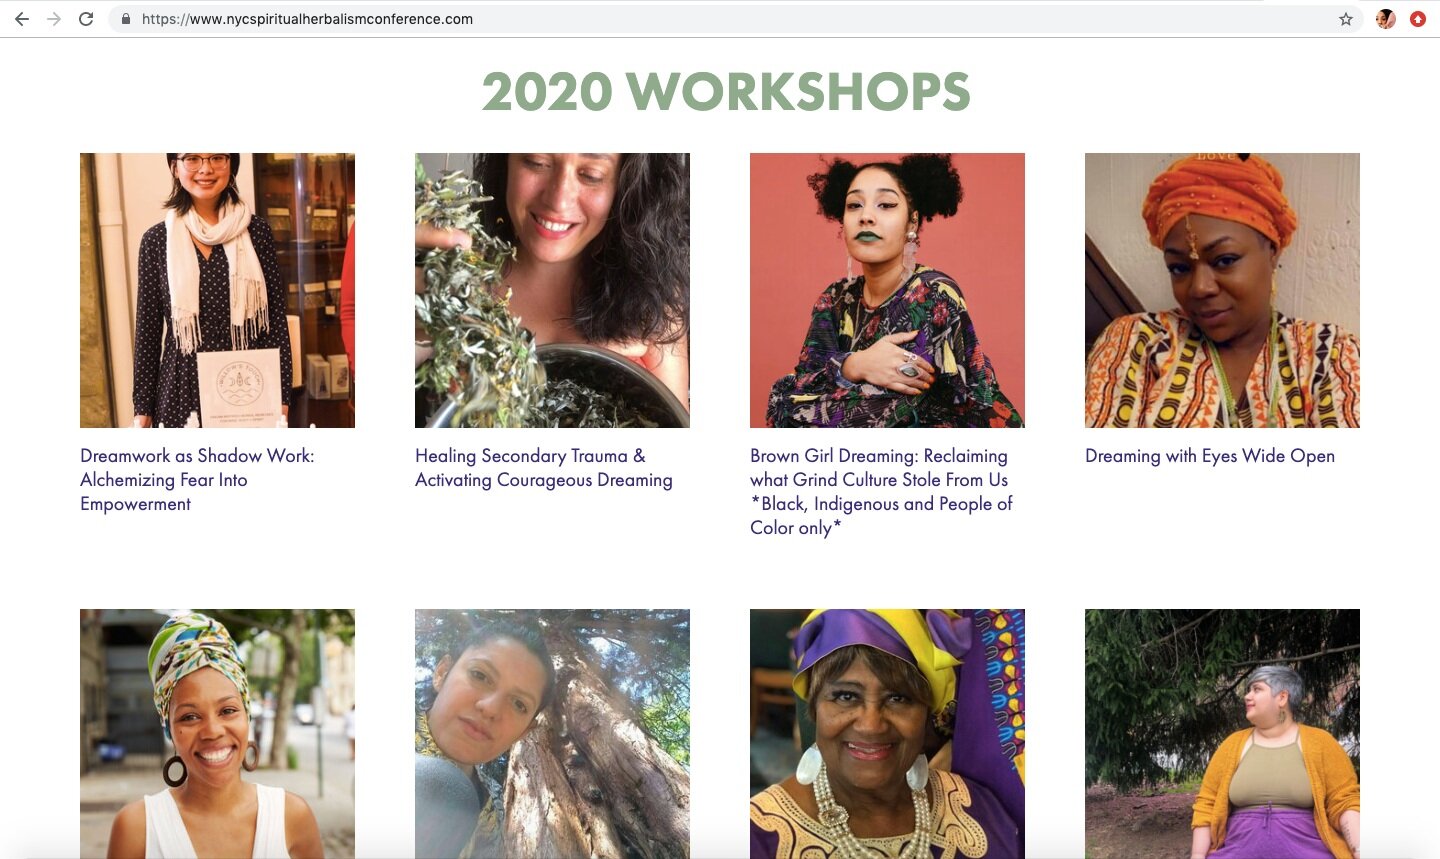 2020 NYC Spiritual Herbalism Conference: Dreams